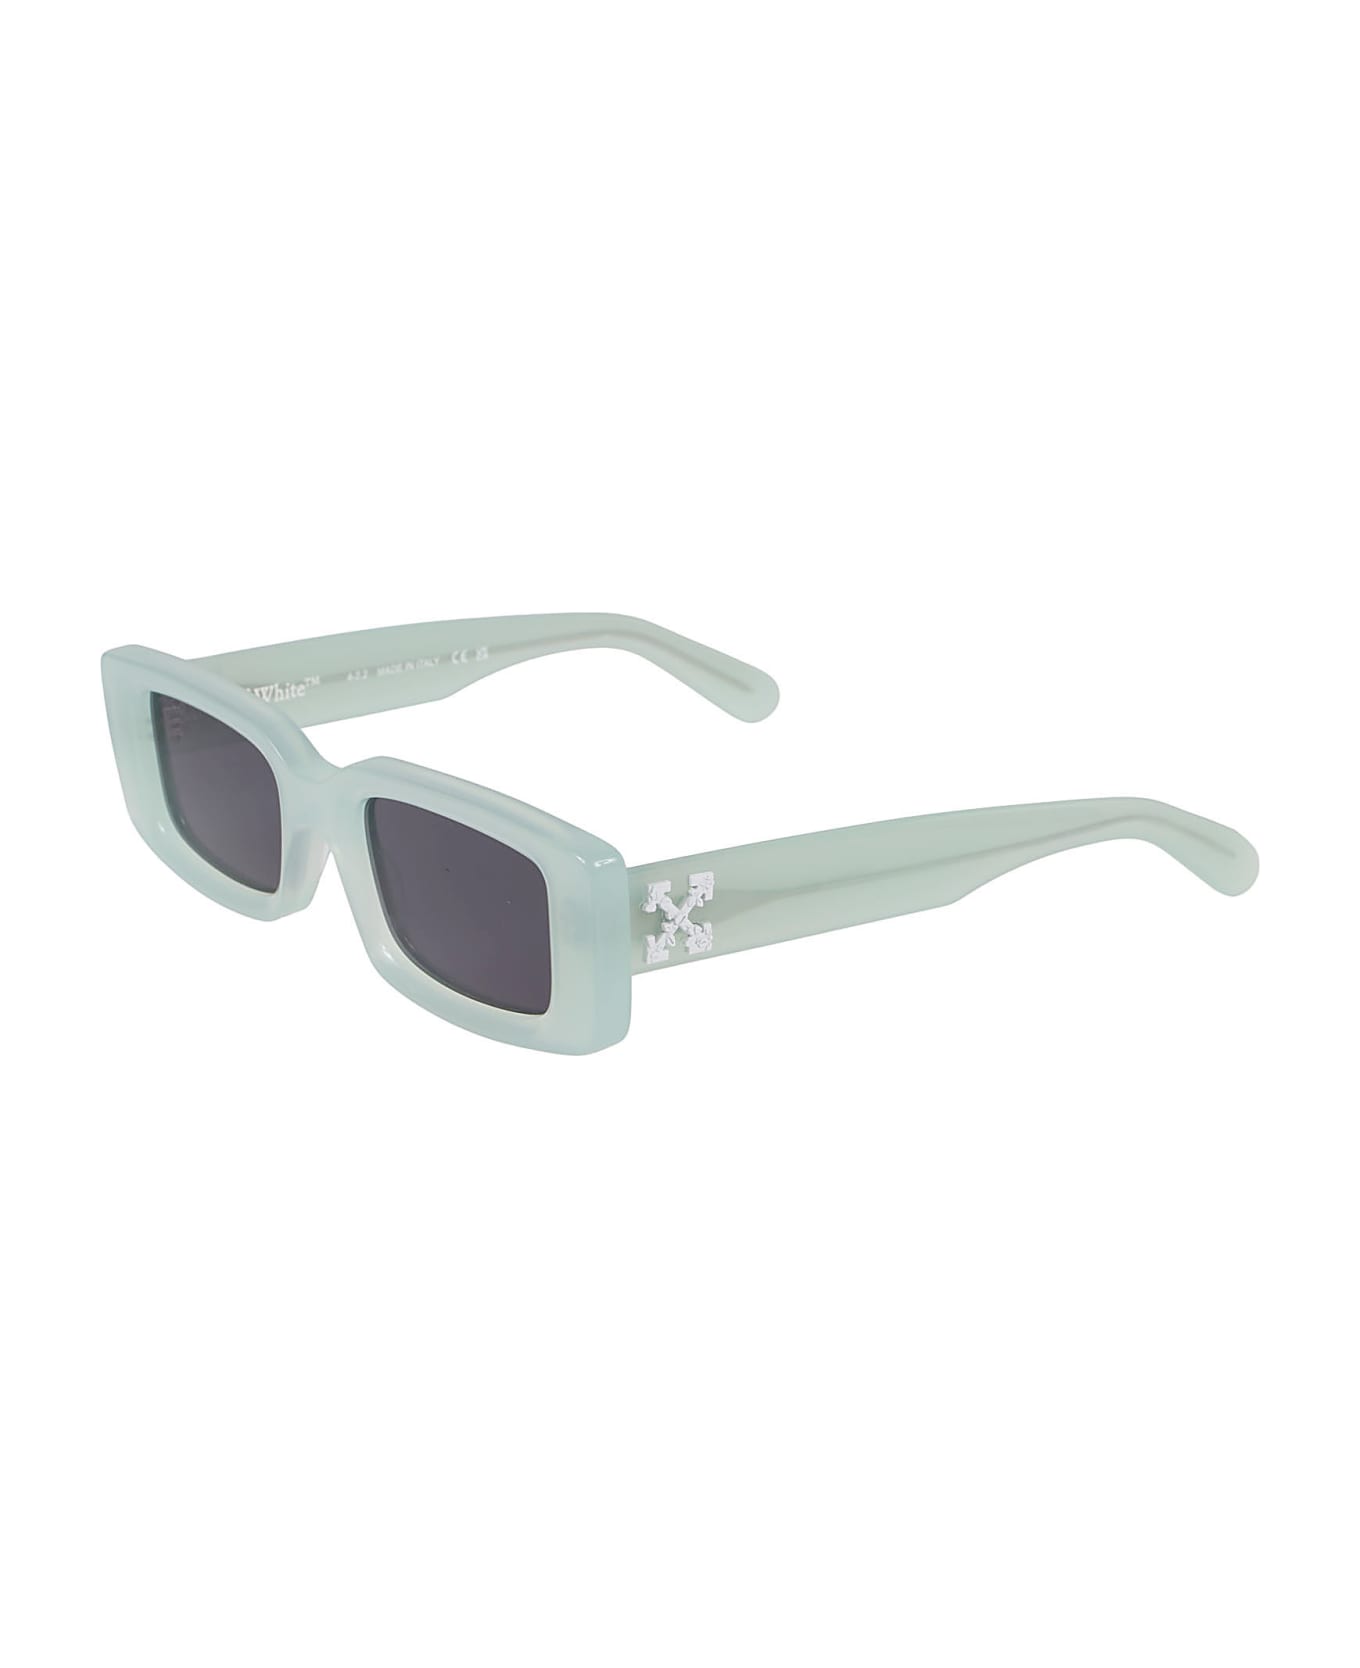 Off-White Arthur Sunglasses - Teal Dark Grey